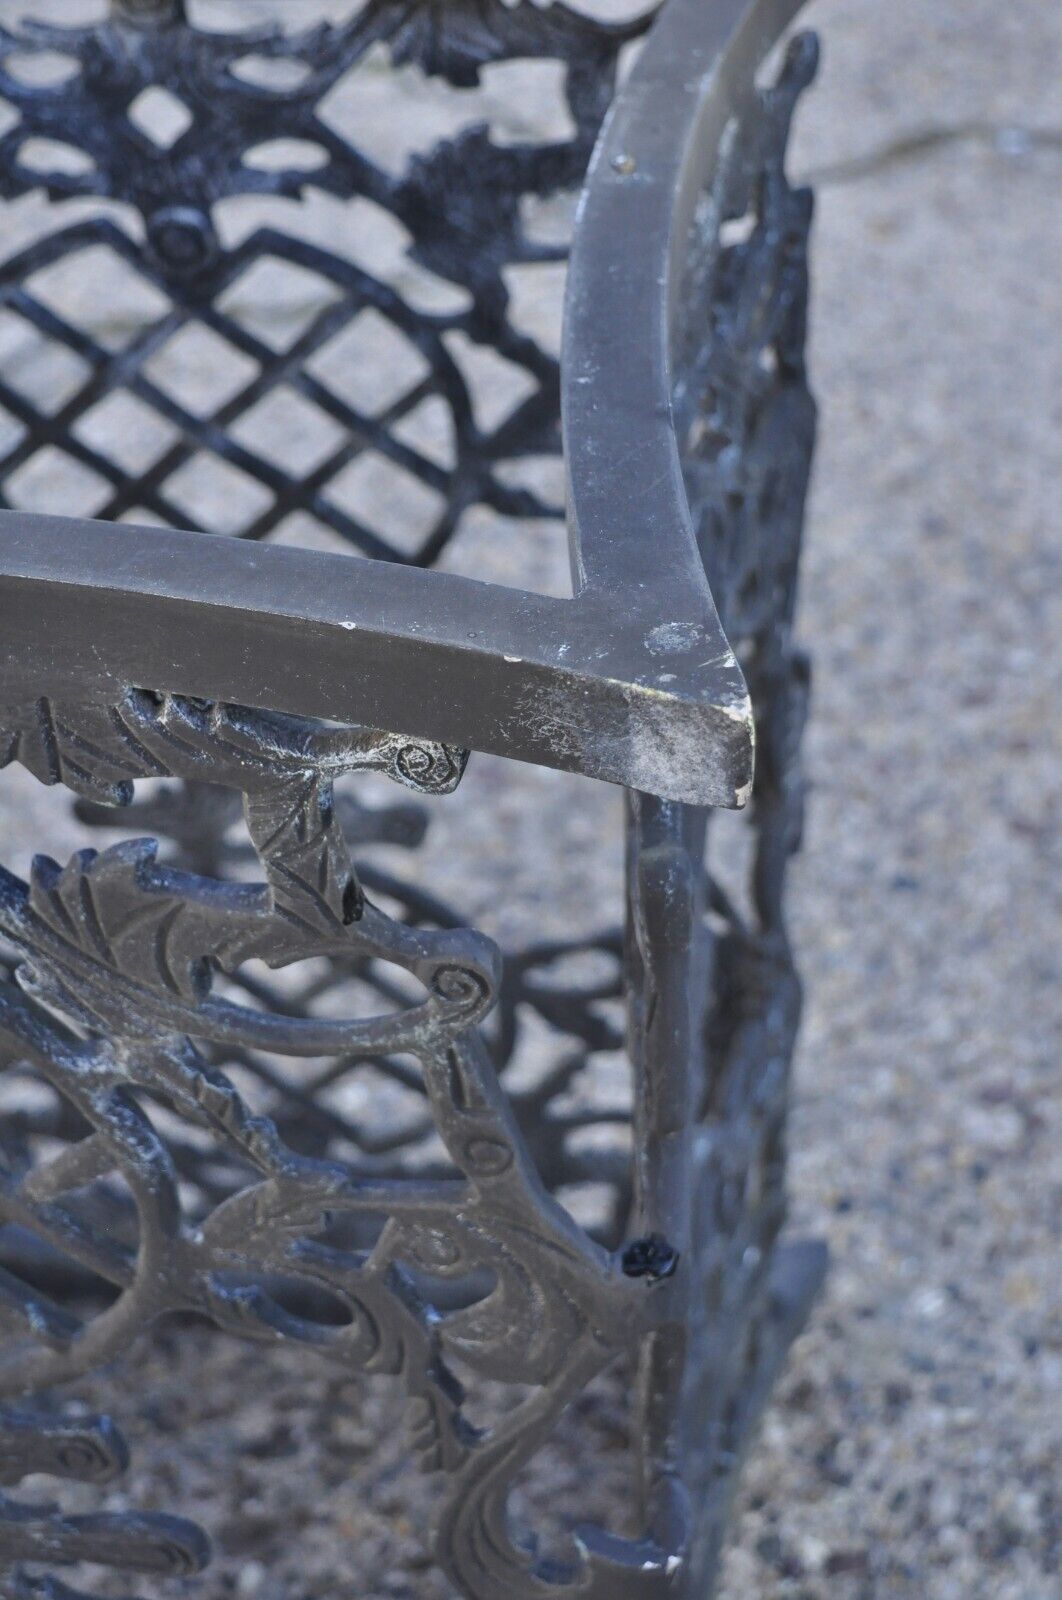 Ornate Cast Aluminum Mediterranean Style Black Pedestal Dining Table Base